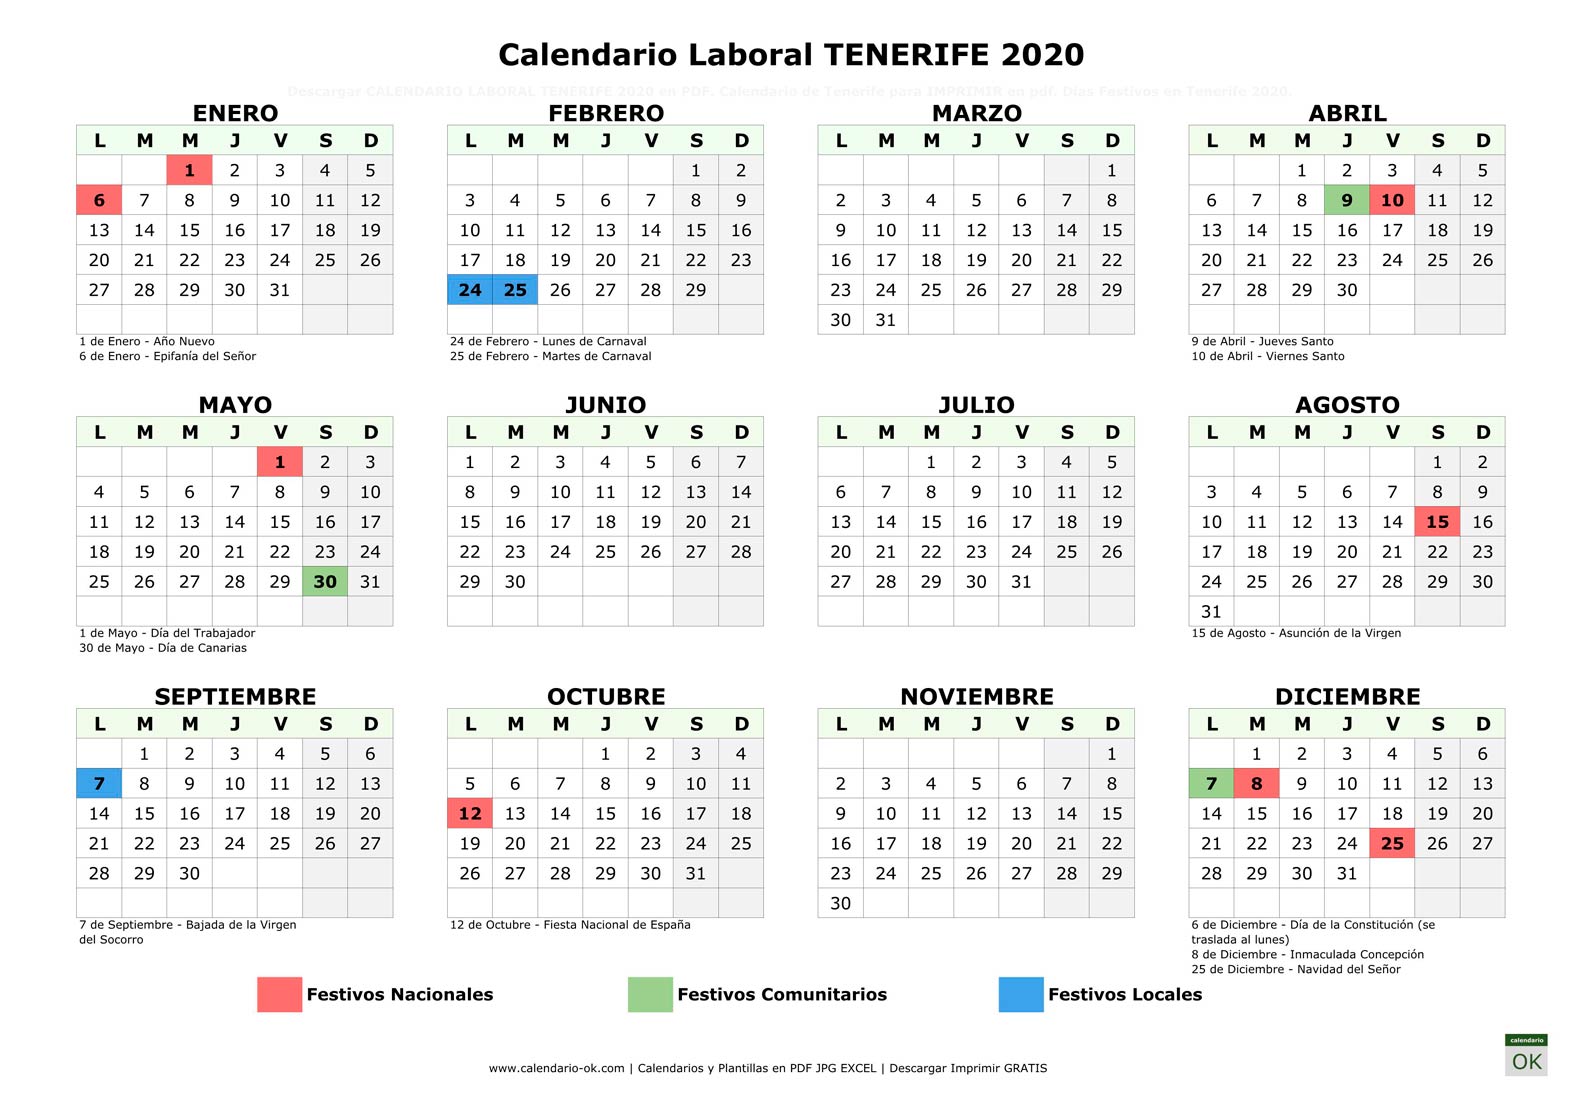 Calendario Laboral TENERIFE 2020 horizontal